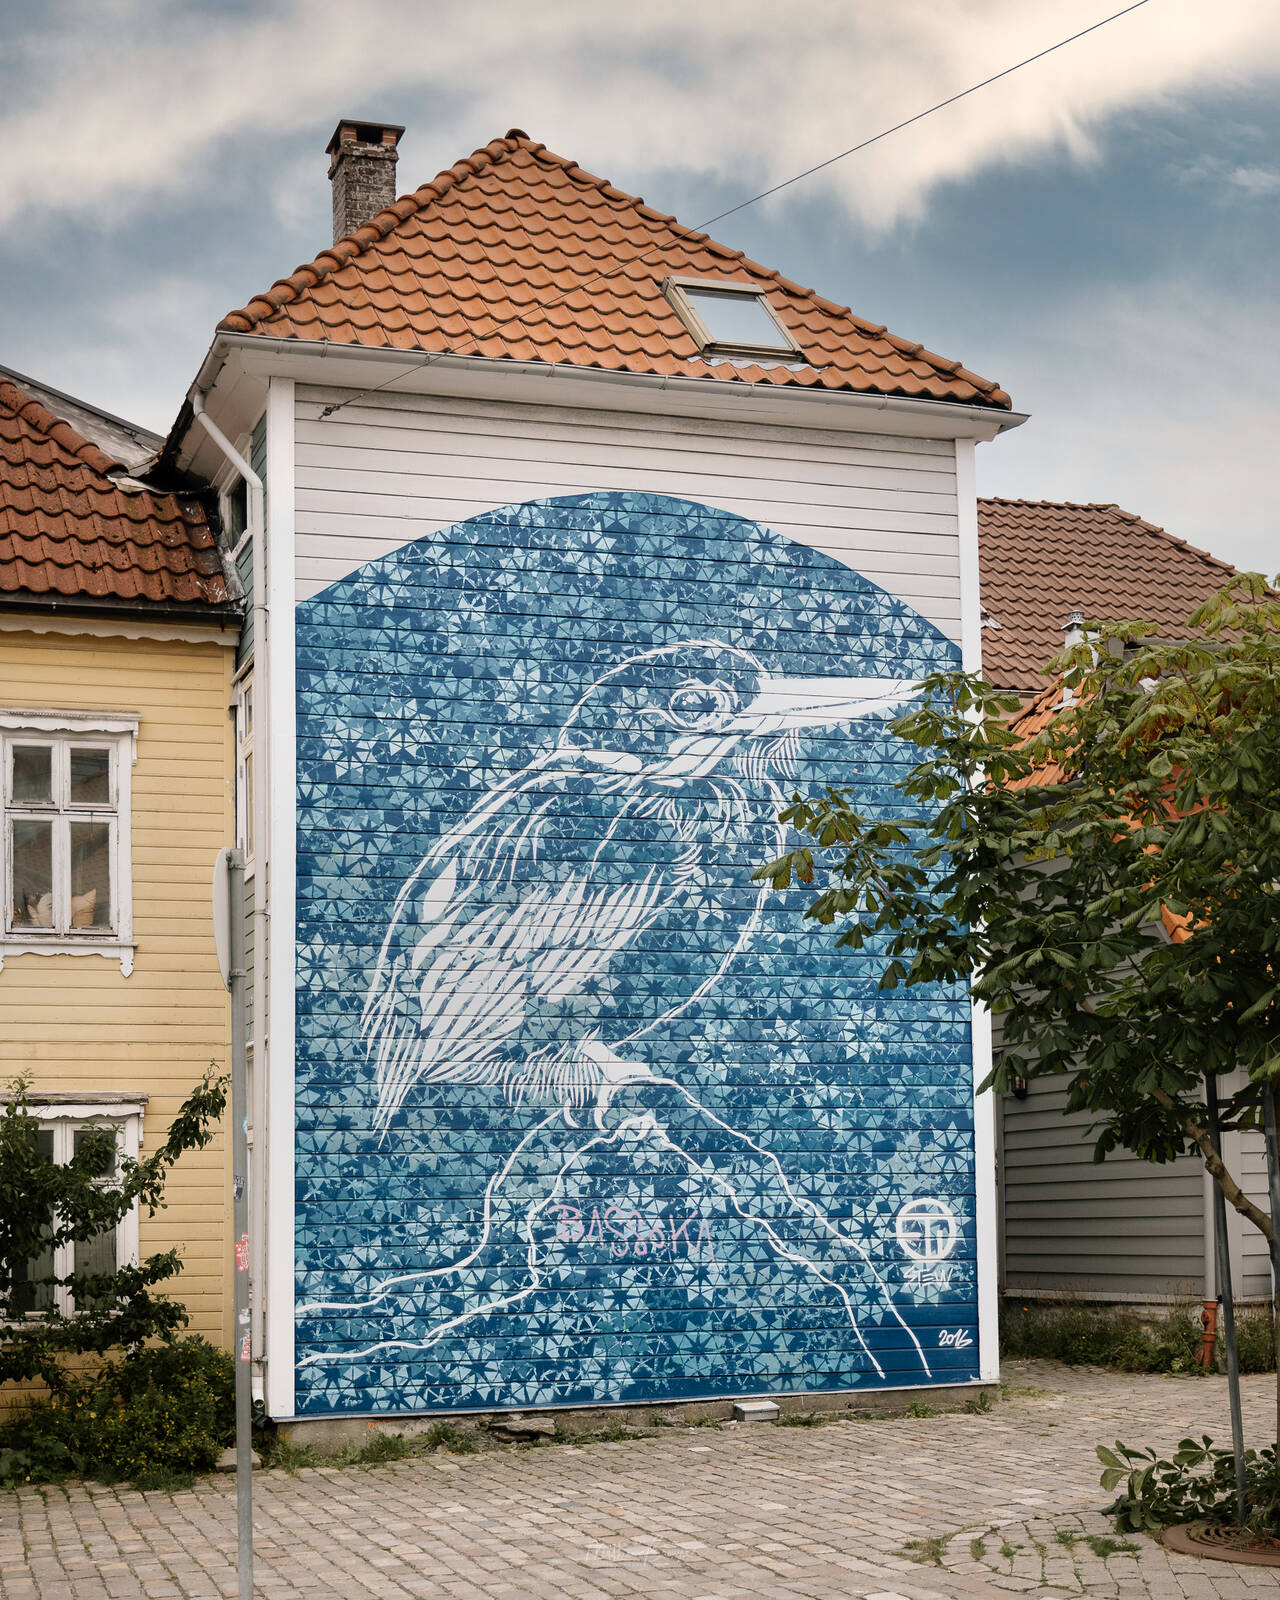 Image of Bergen Bird Wall by Mathew Browne